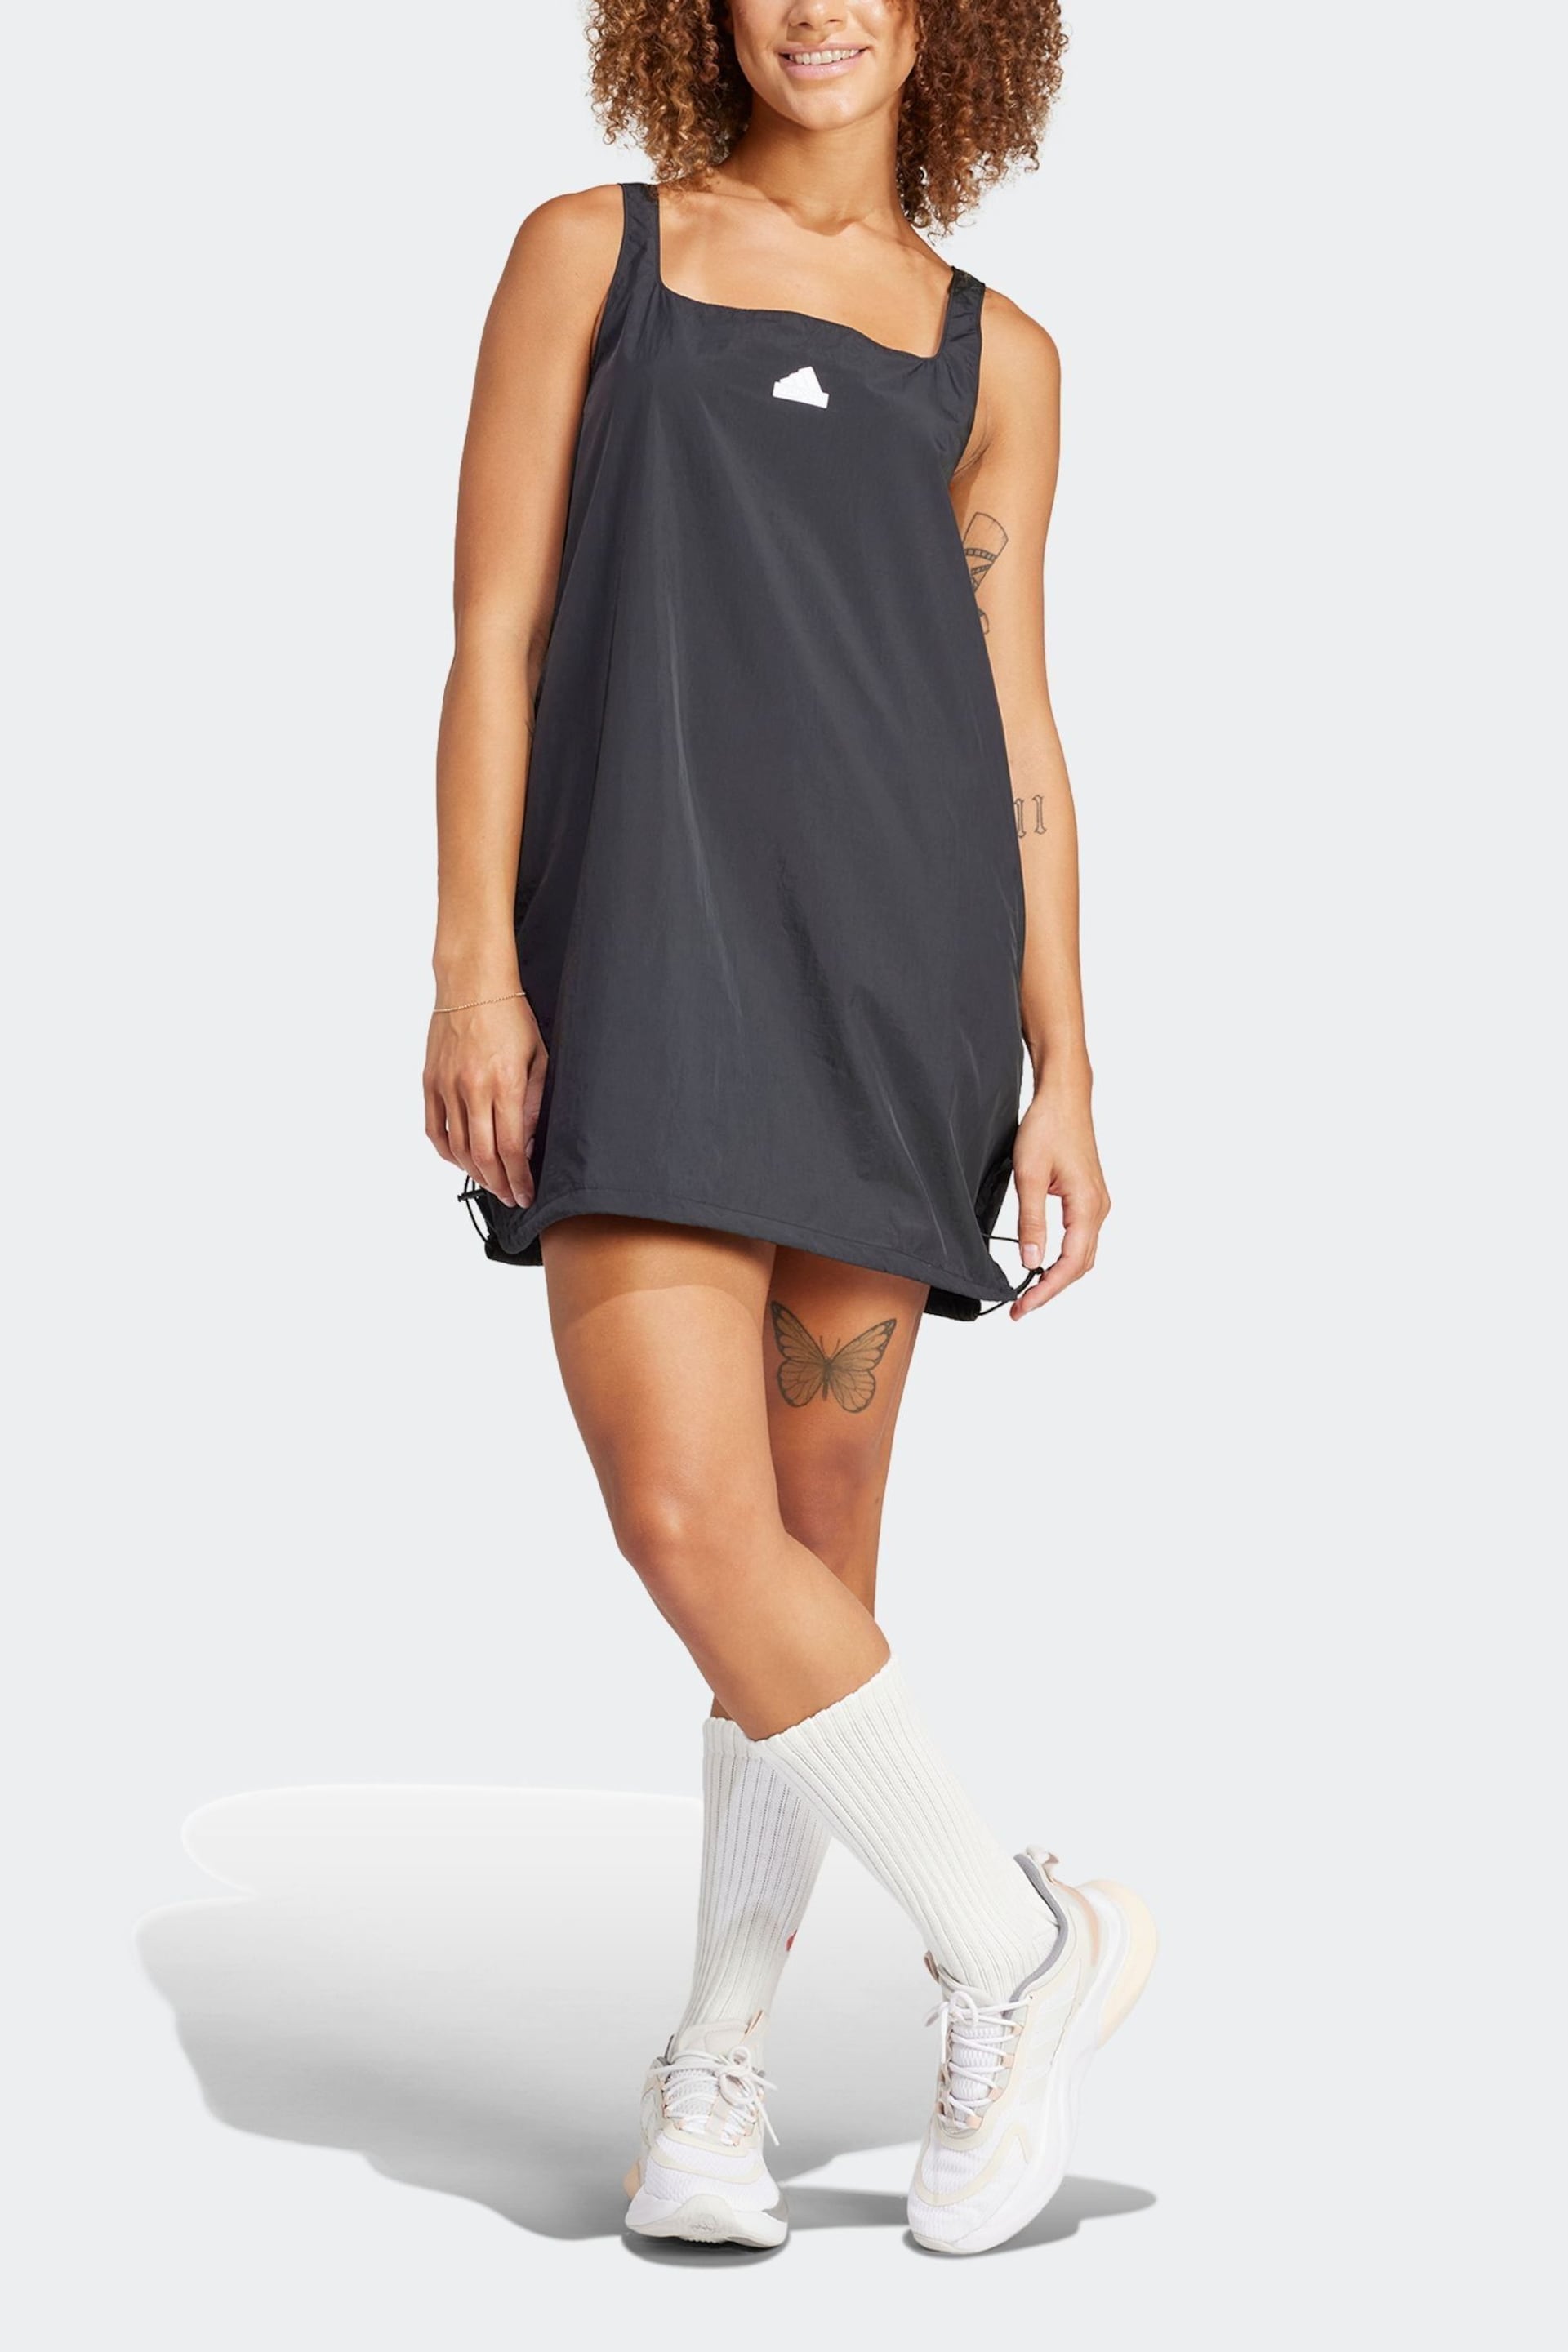 adidas Black Sportswear City Escape Summer Dress - Image 2 of 6